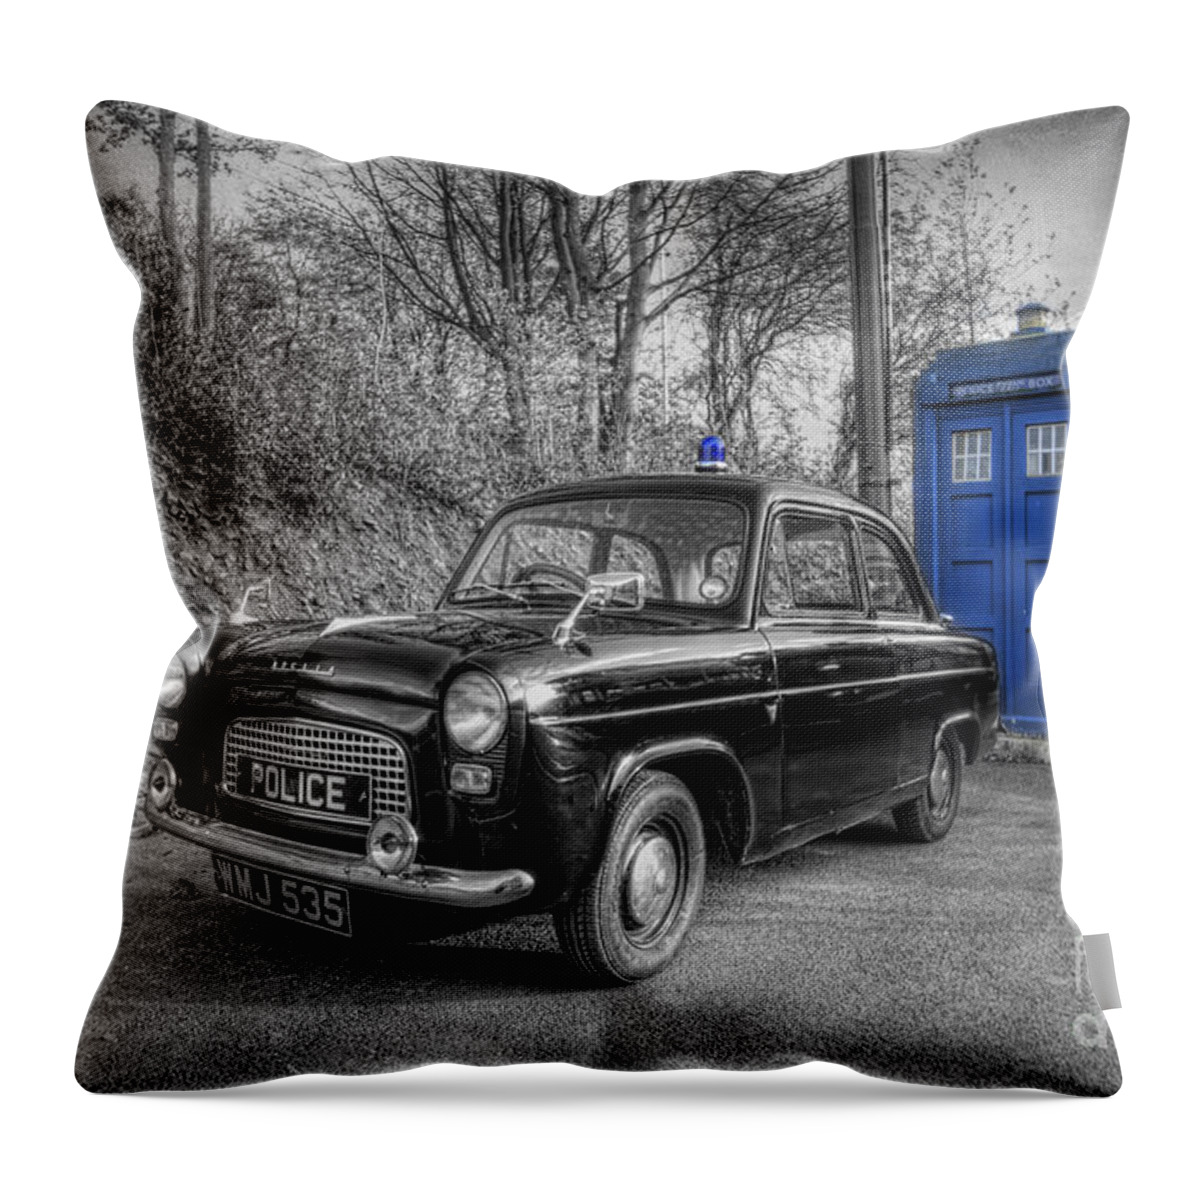 Art Throw Pillow featuring the photograph Old British Police Car And Tardis by Yhun Suarez